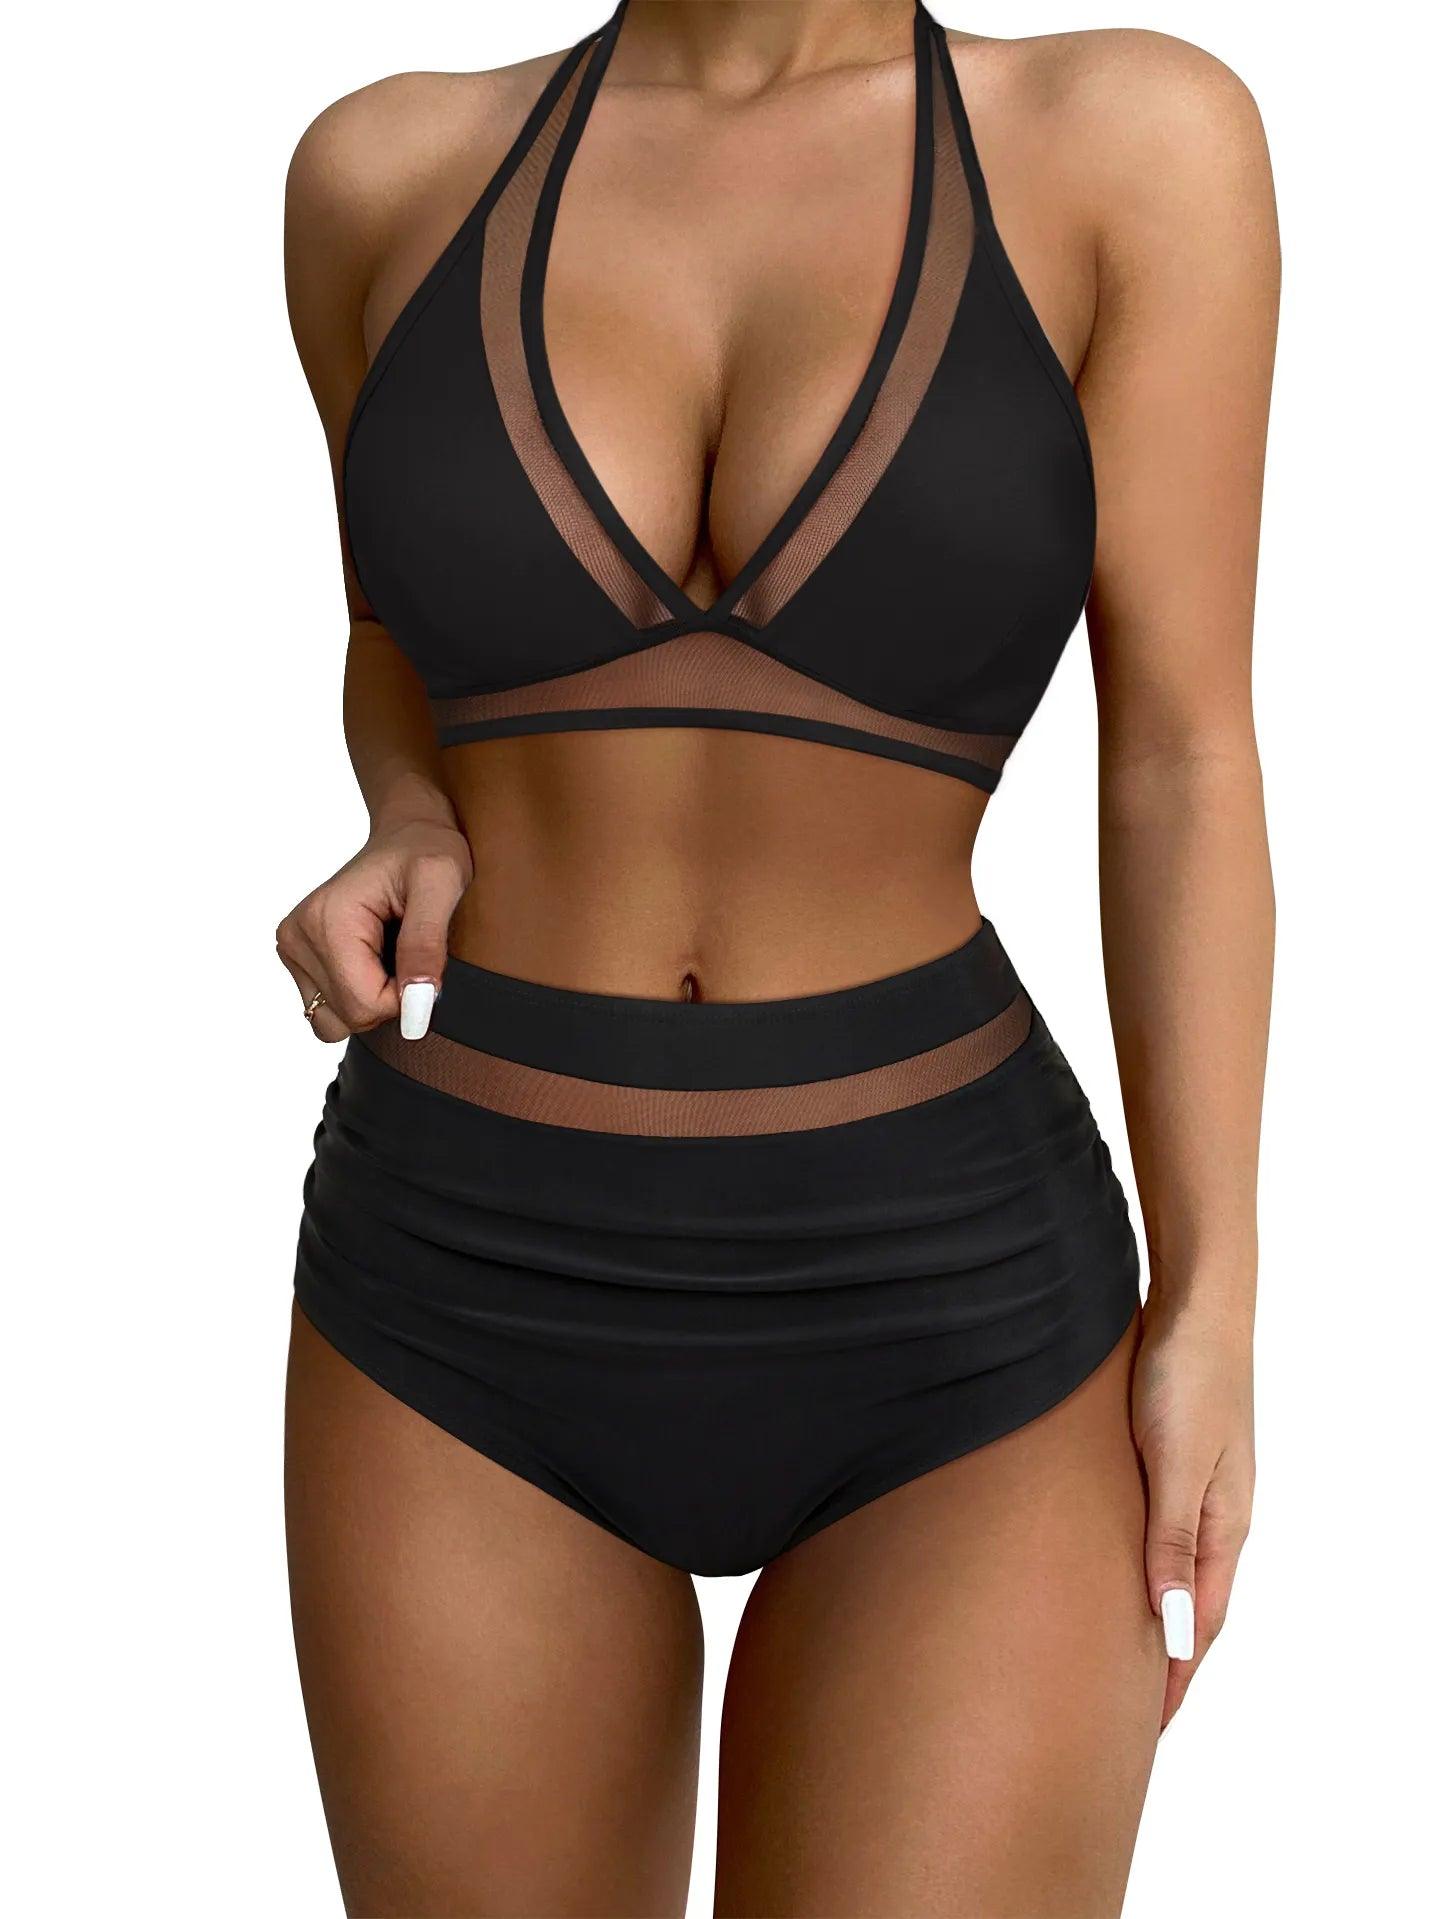  STKOOBQ Women Swimsuit One Shoulder Wide Straps Middle Cut Mesh Bathing  Suit Plus Size Swimwear Sexy Summer Beachwear (Black, S) : Clothing, Shoes  & Jewelry